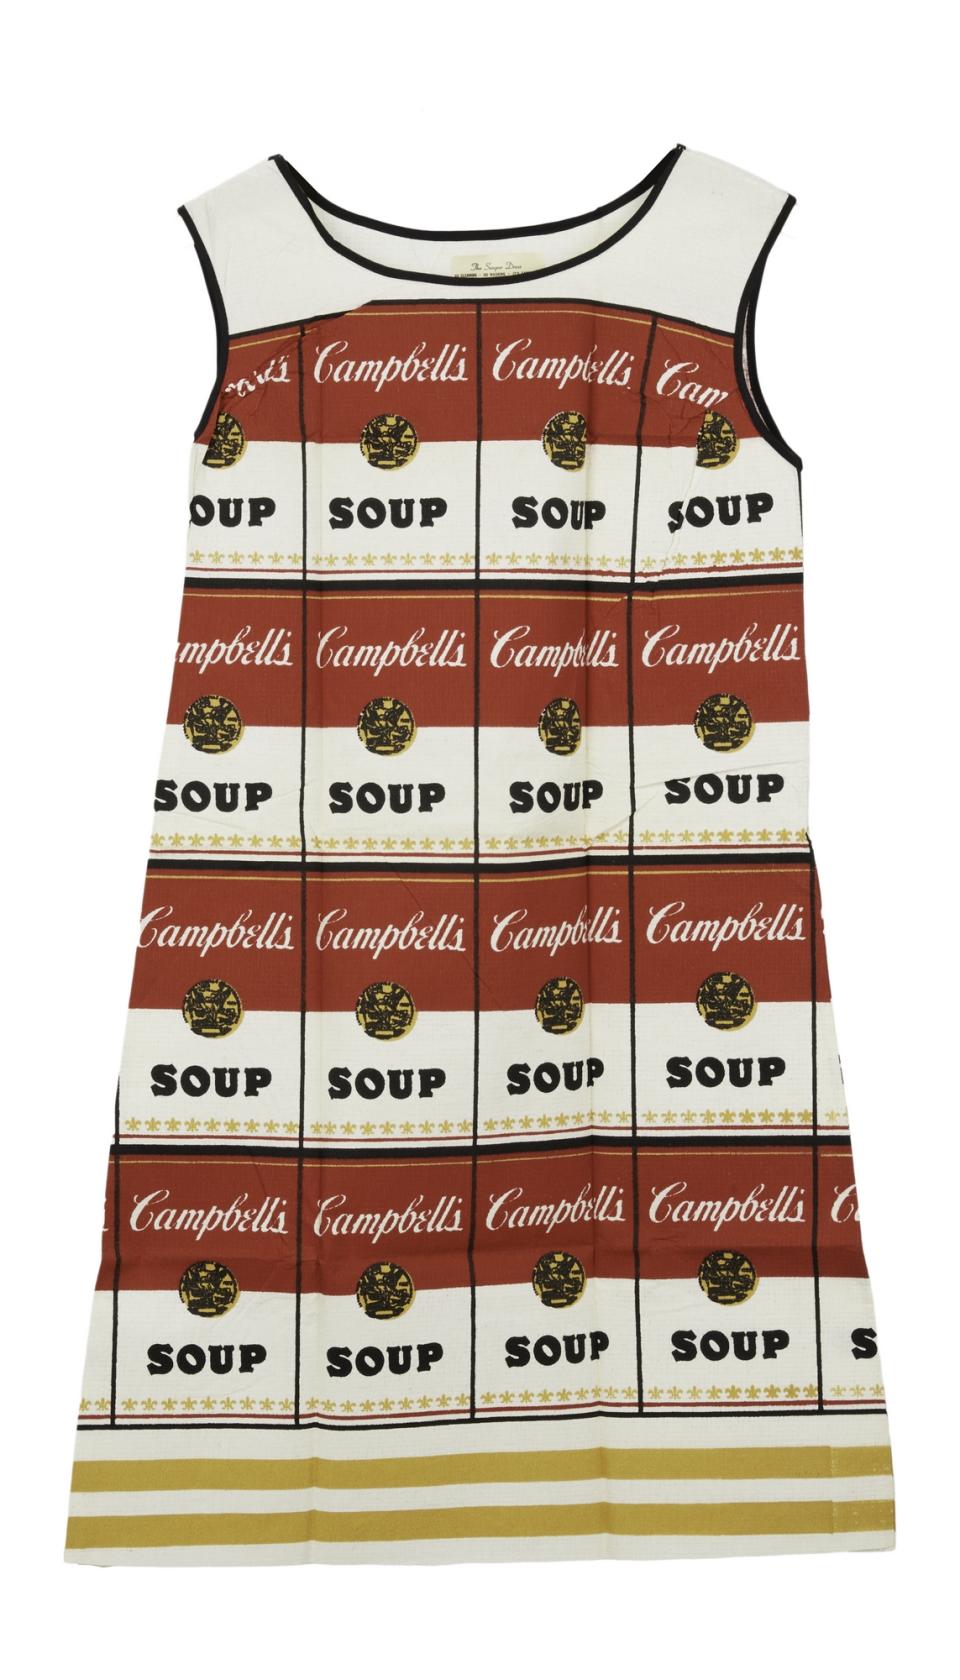 Campbell’s Souper dress